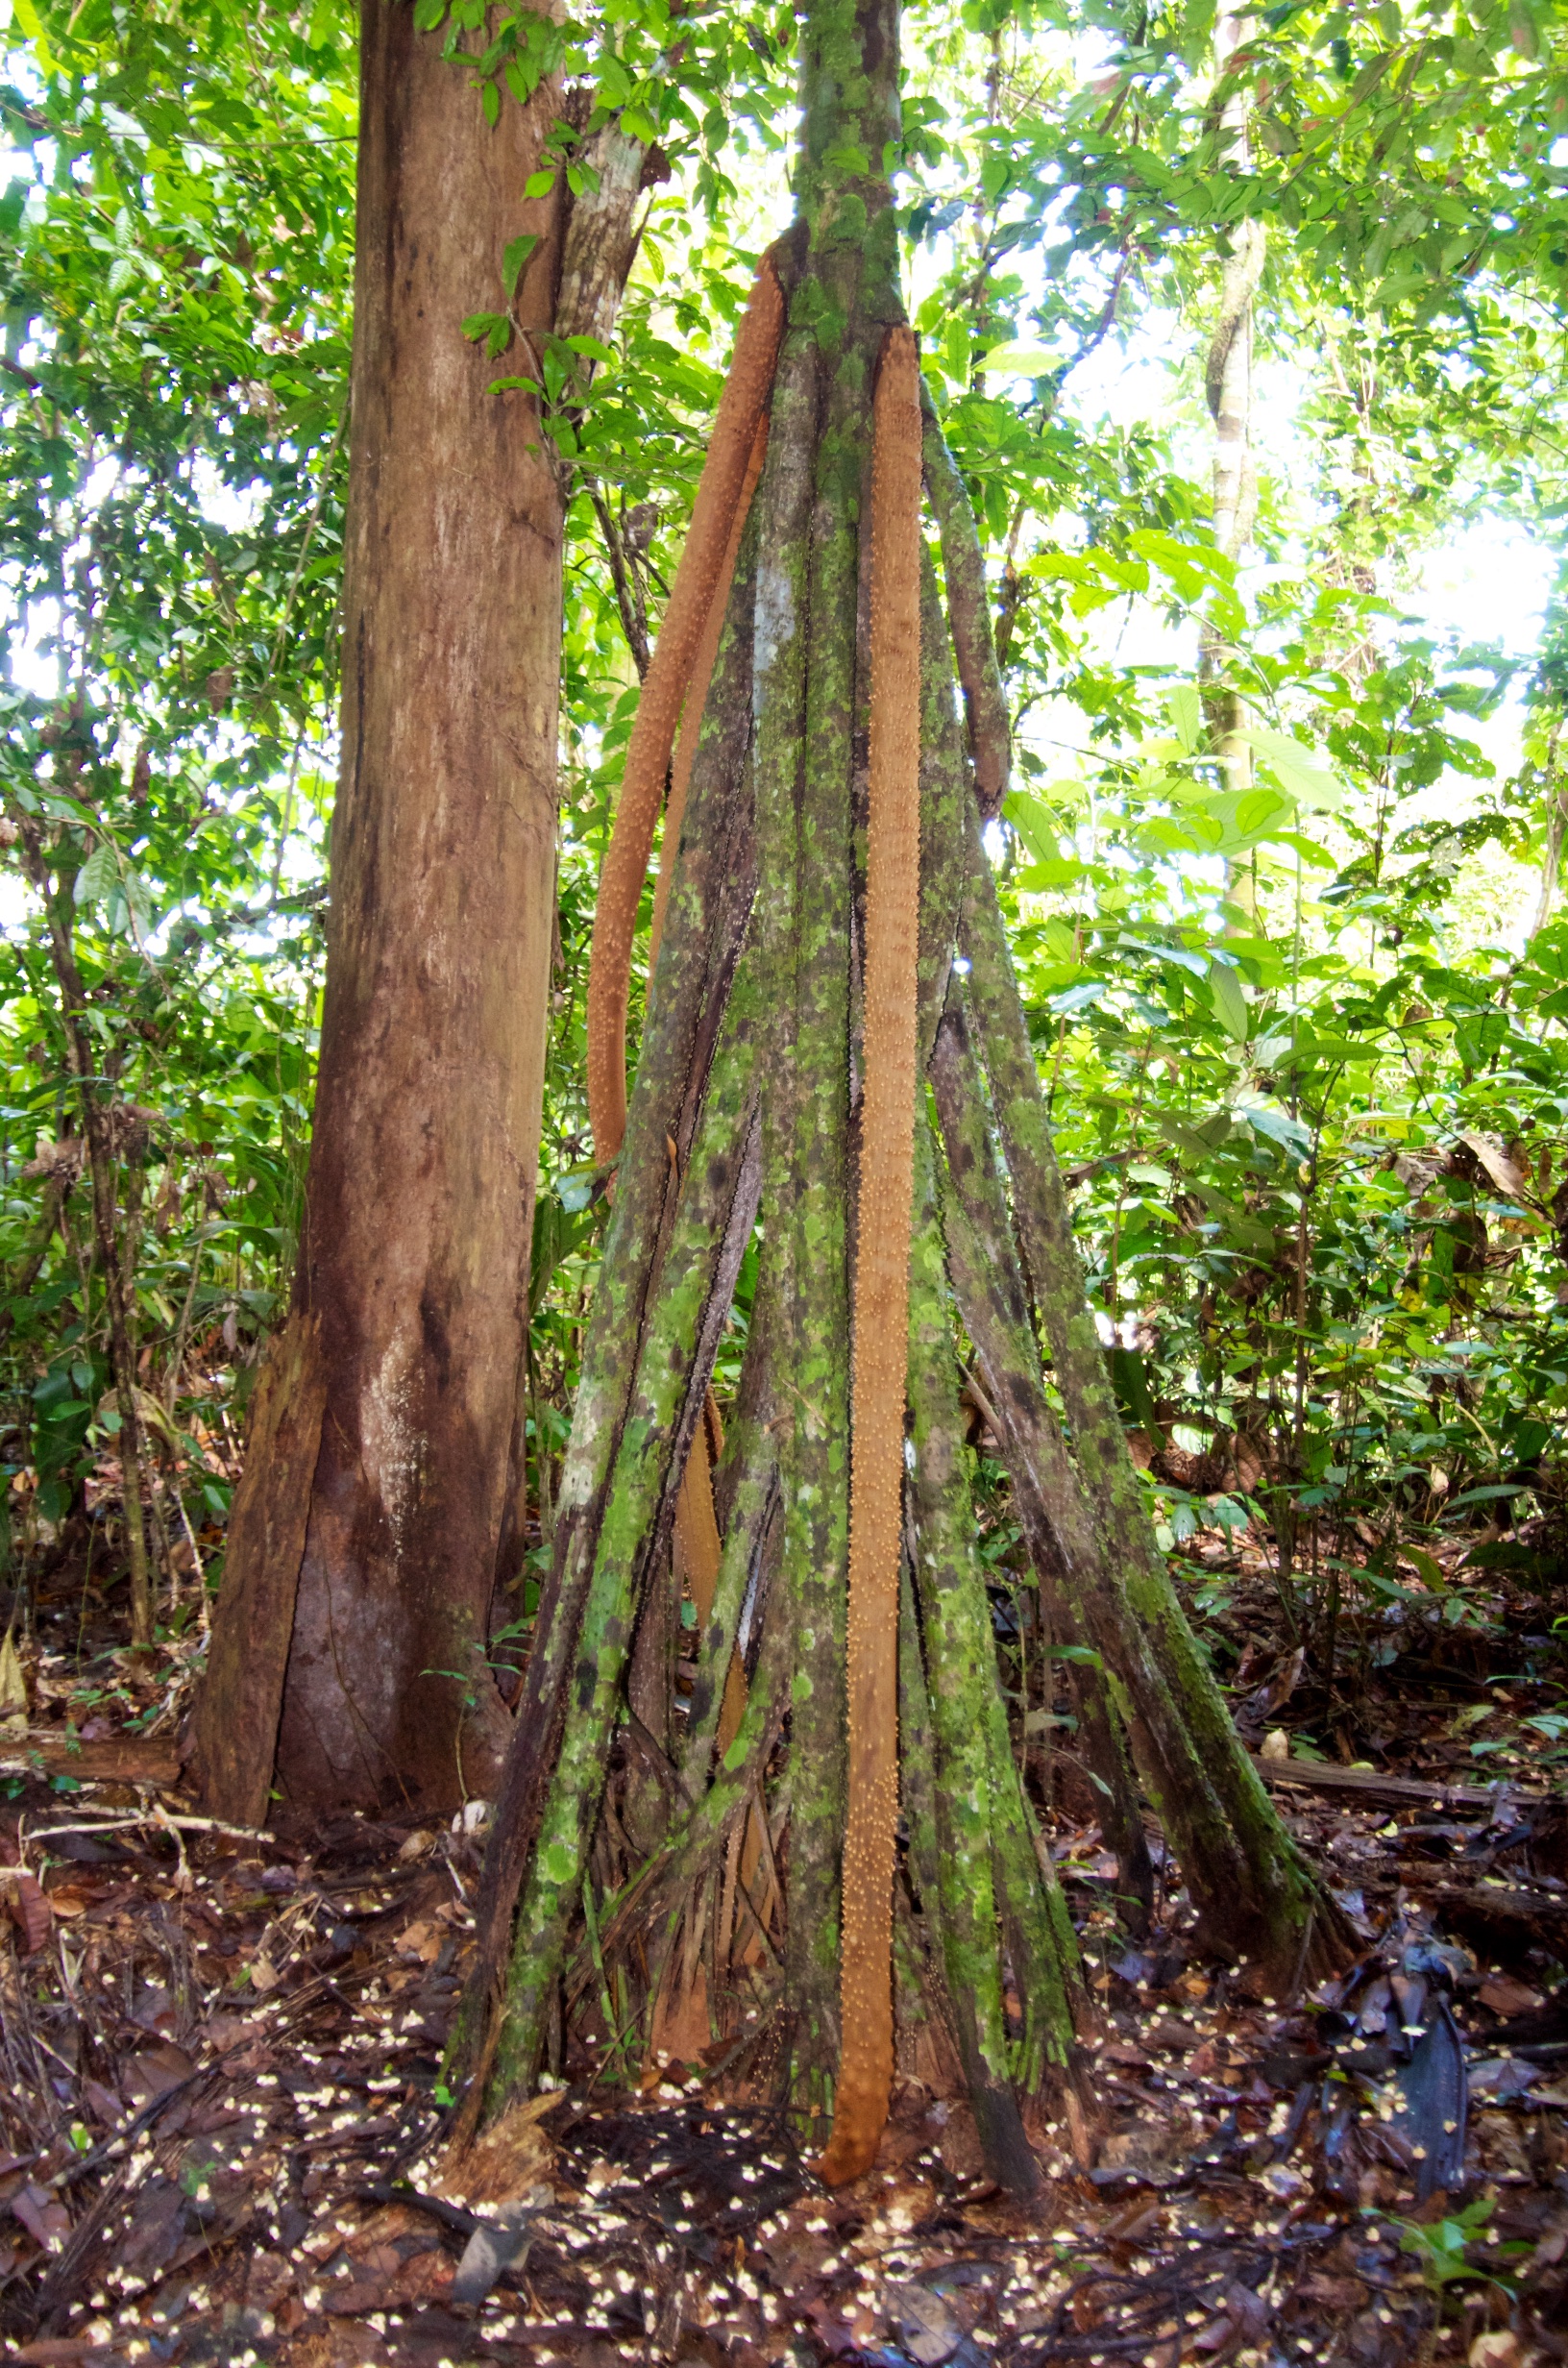  Walking tree, Refugio Amazonas, Peru 